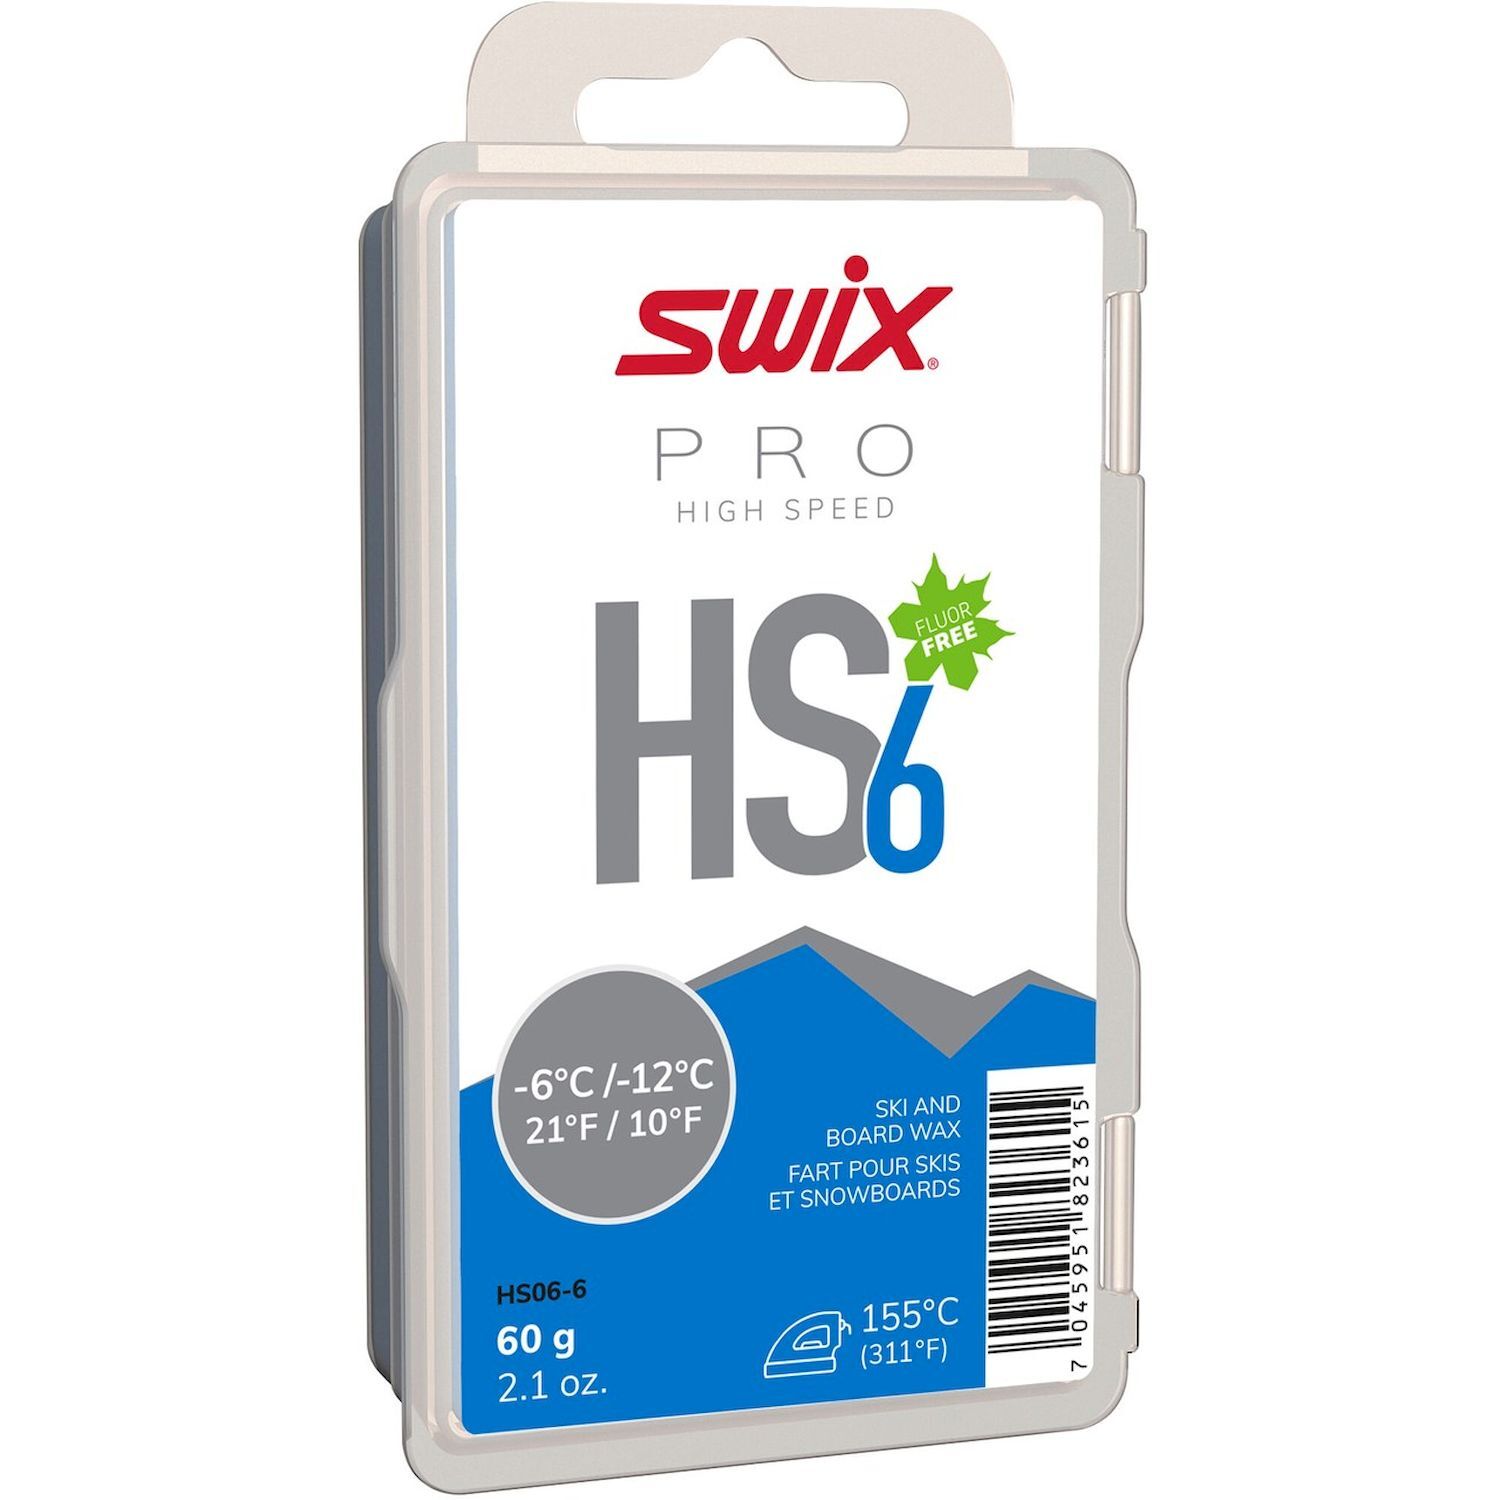 Swix HS6 Blue -6°C/-12°C 60 g - Ski wax